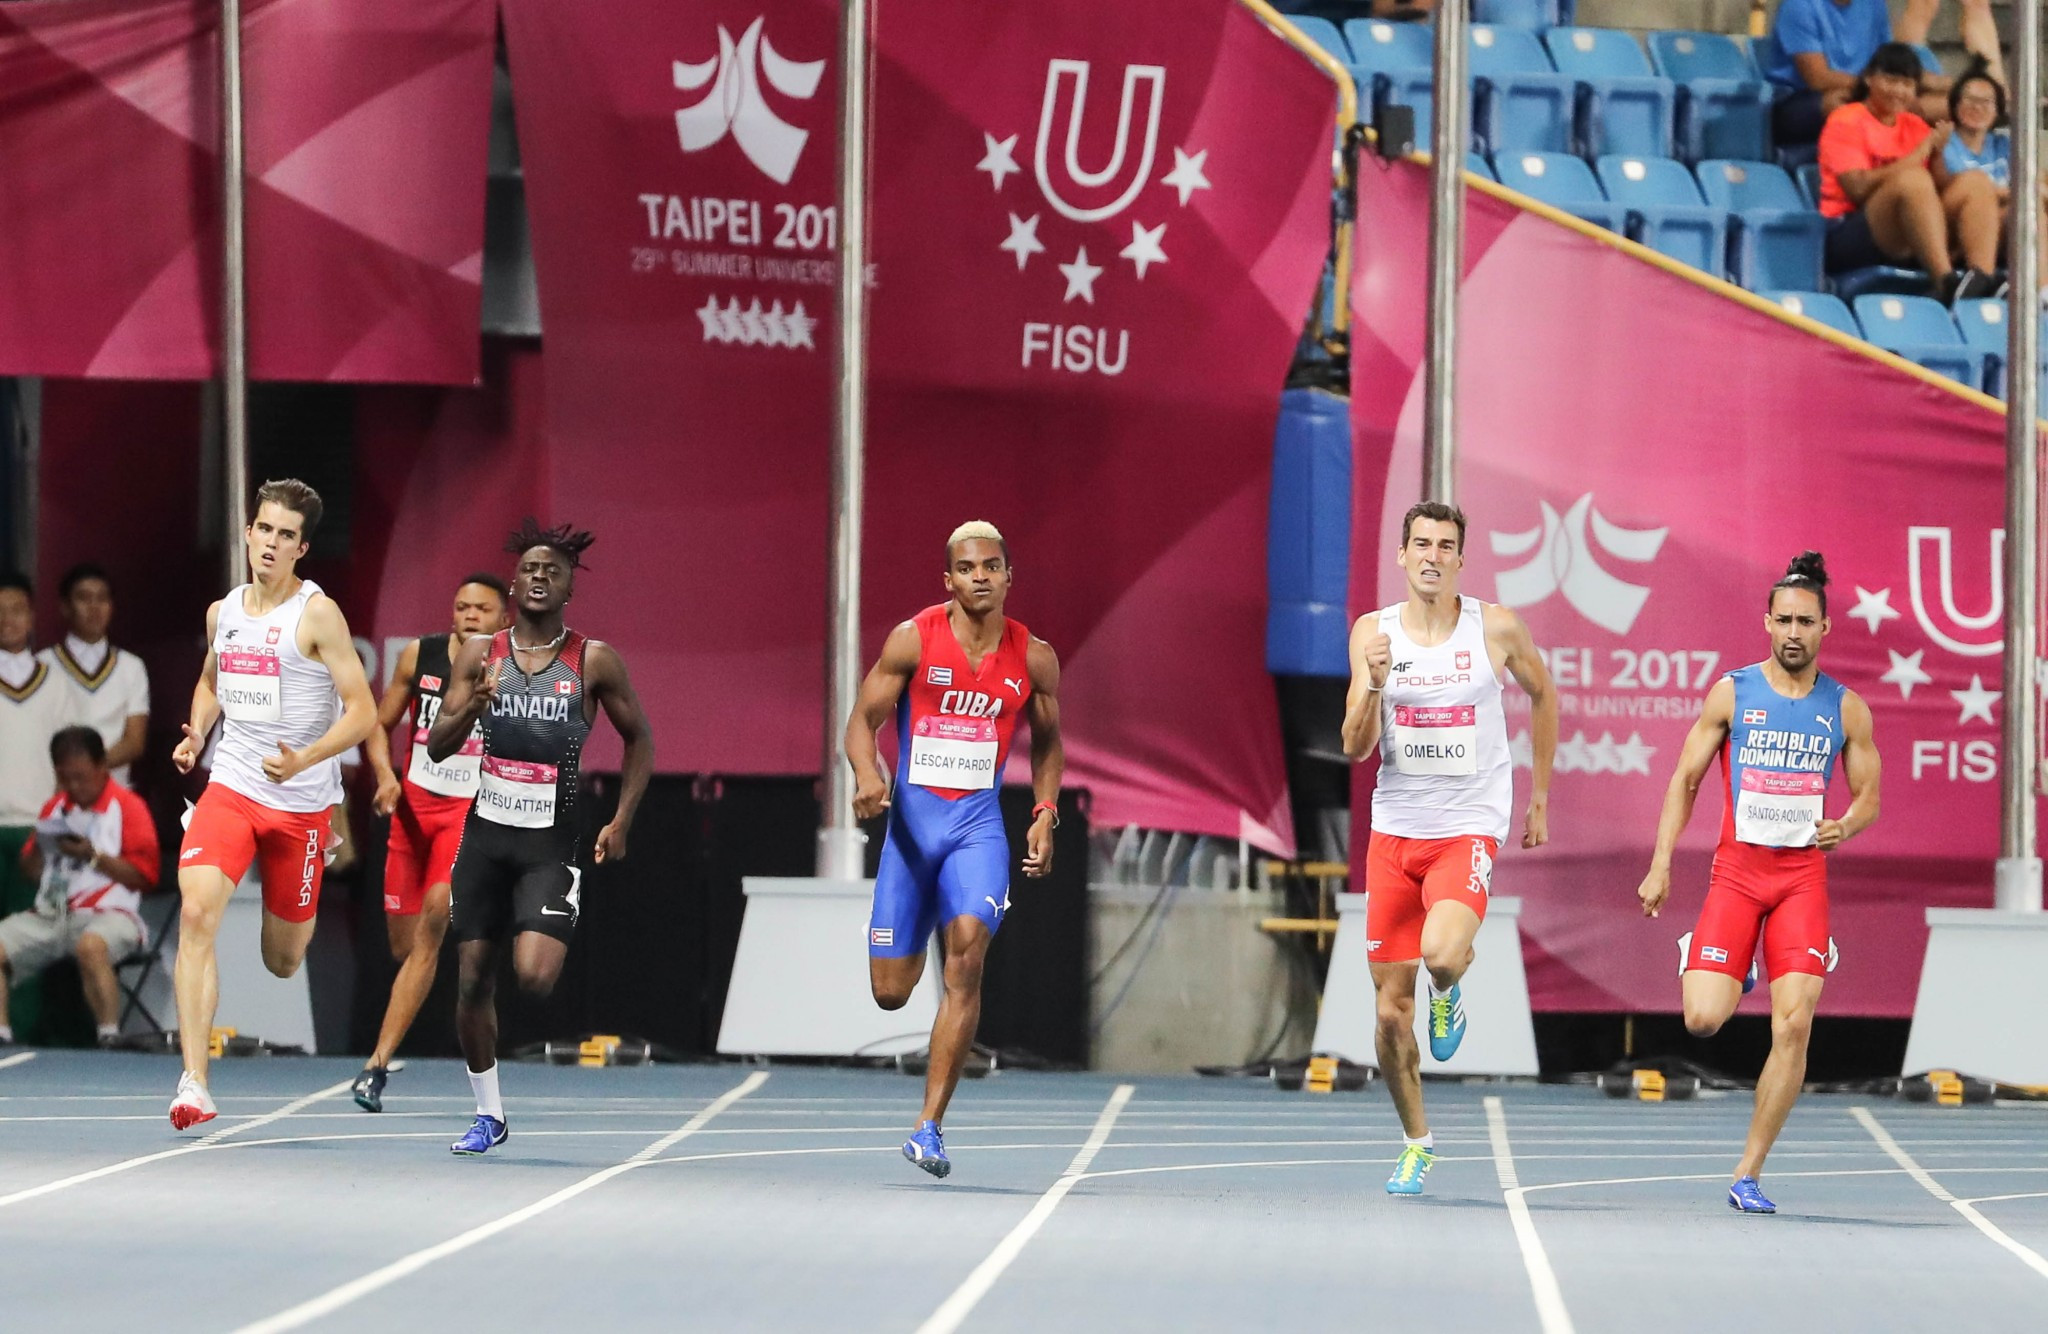 London 2012 silver medallist Santos defends Universiade 400m title